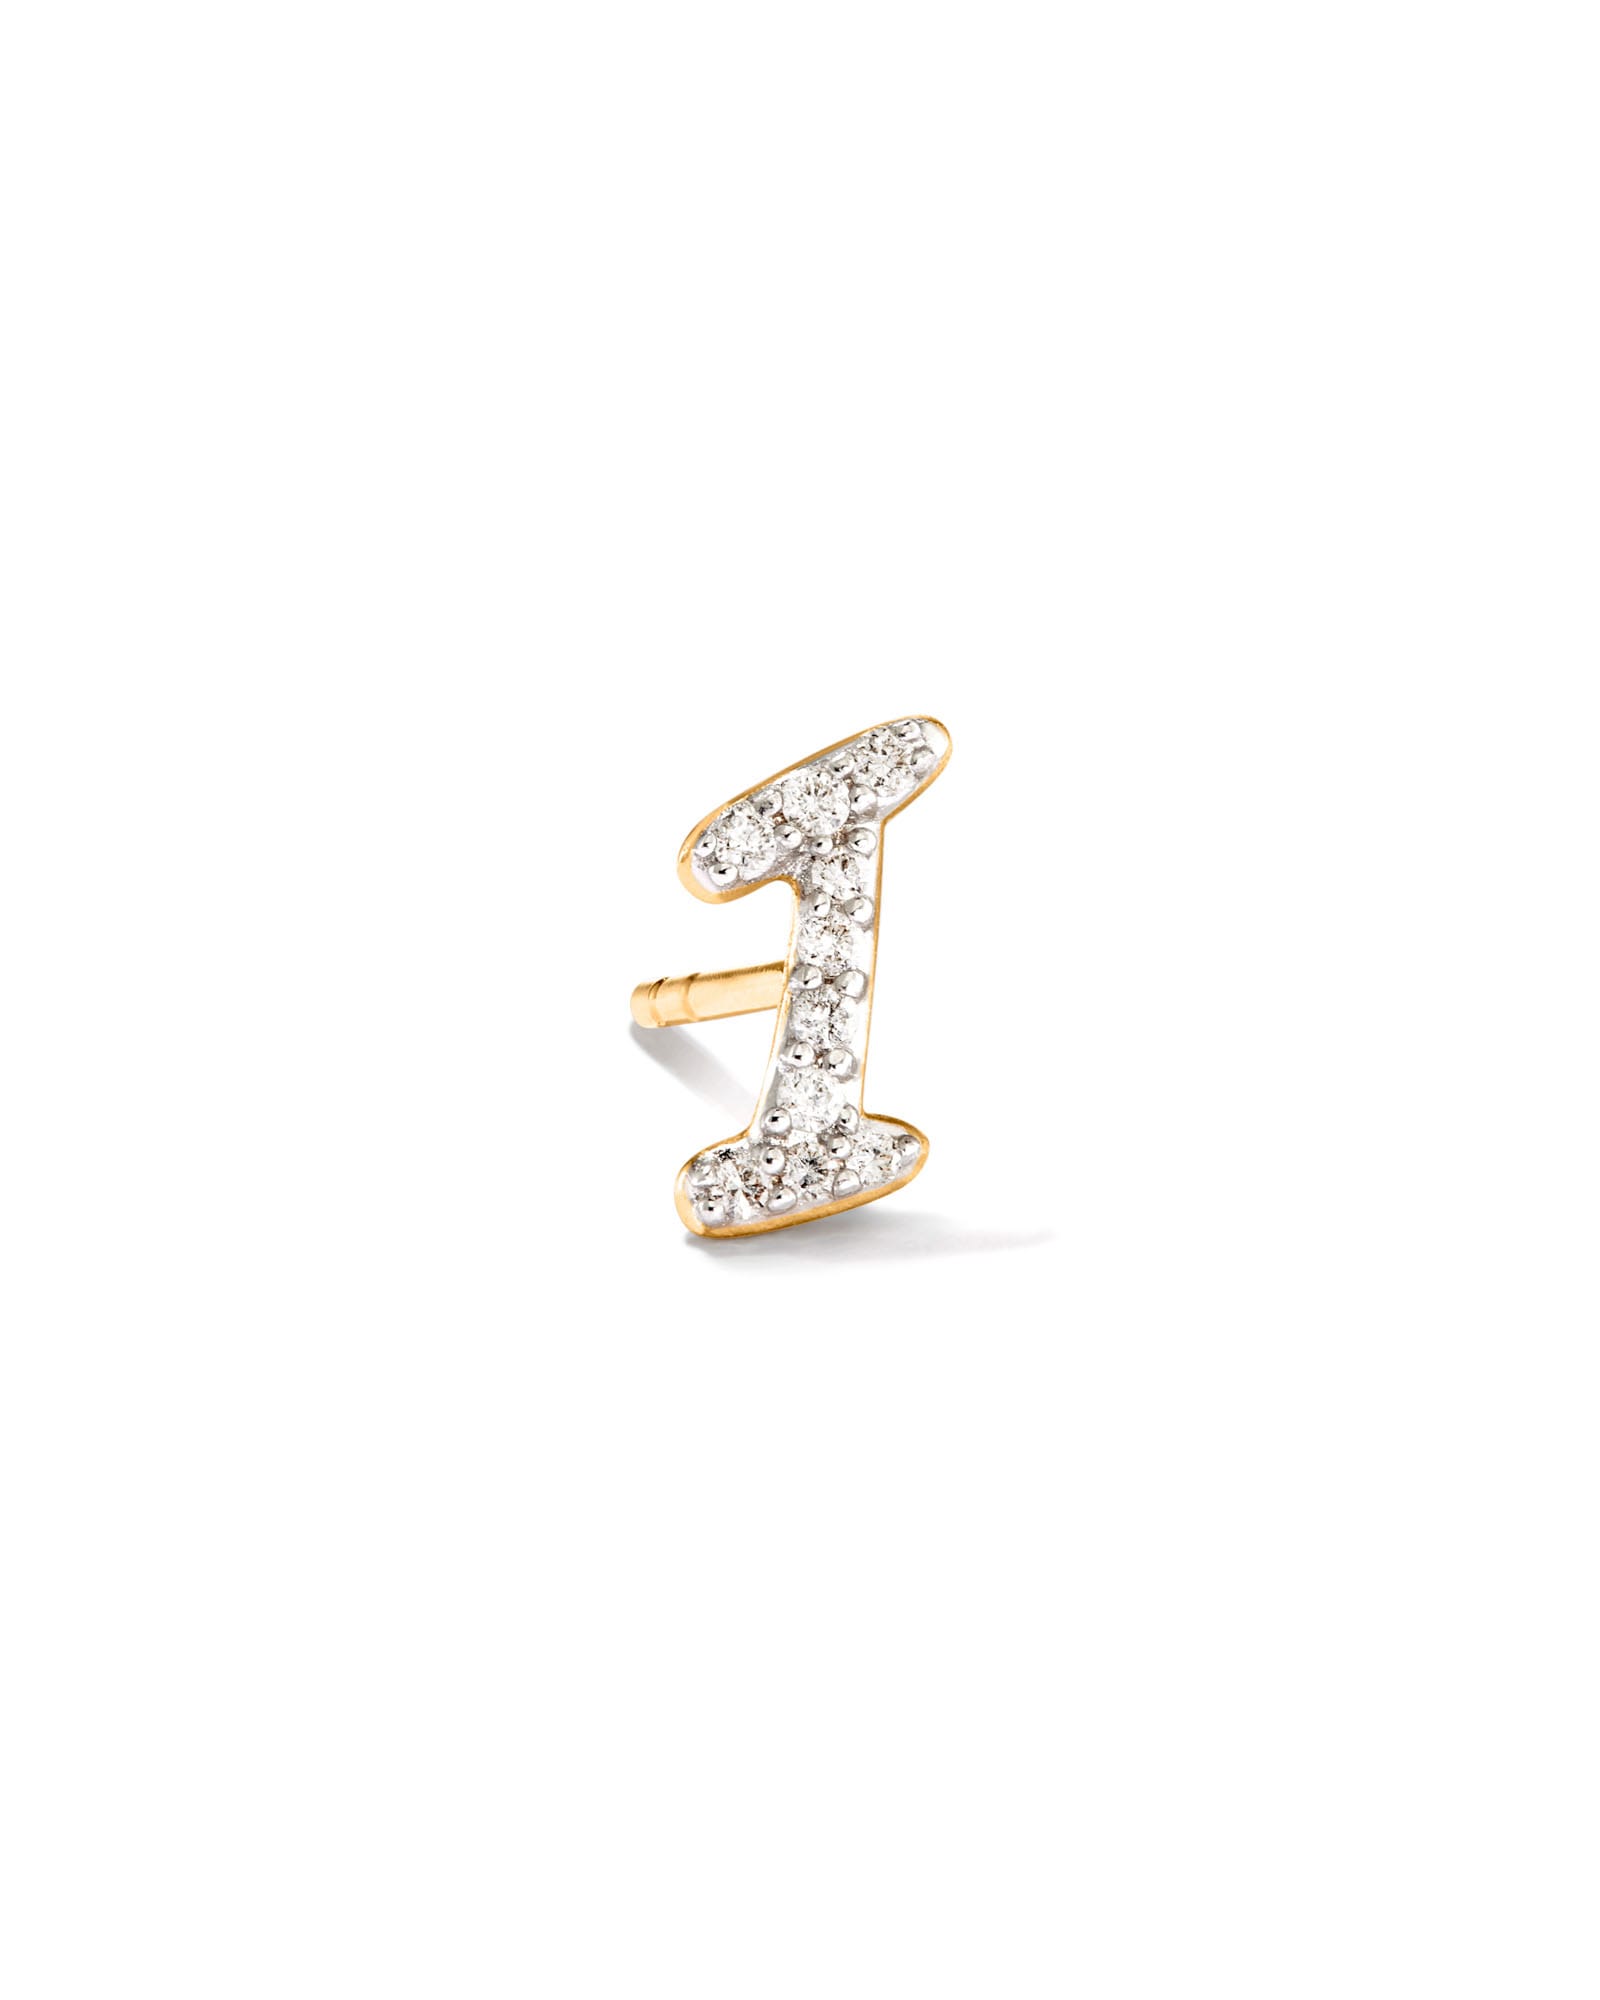 Kendra Scott Letter I 14k Yellow Gold Single Stud Earring in White Diamond | Diamonds